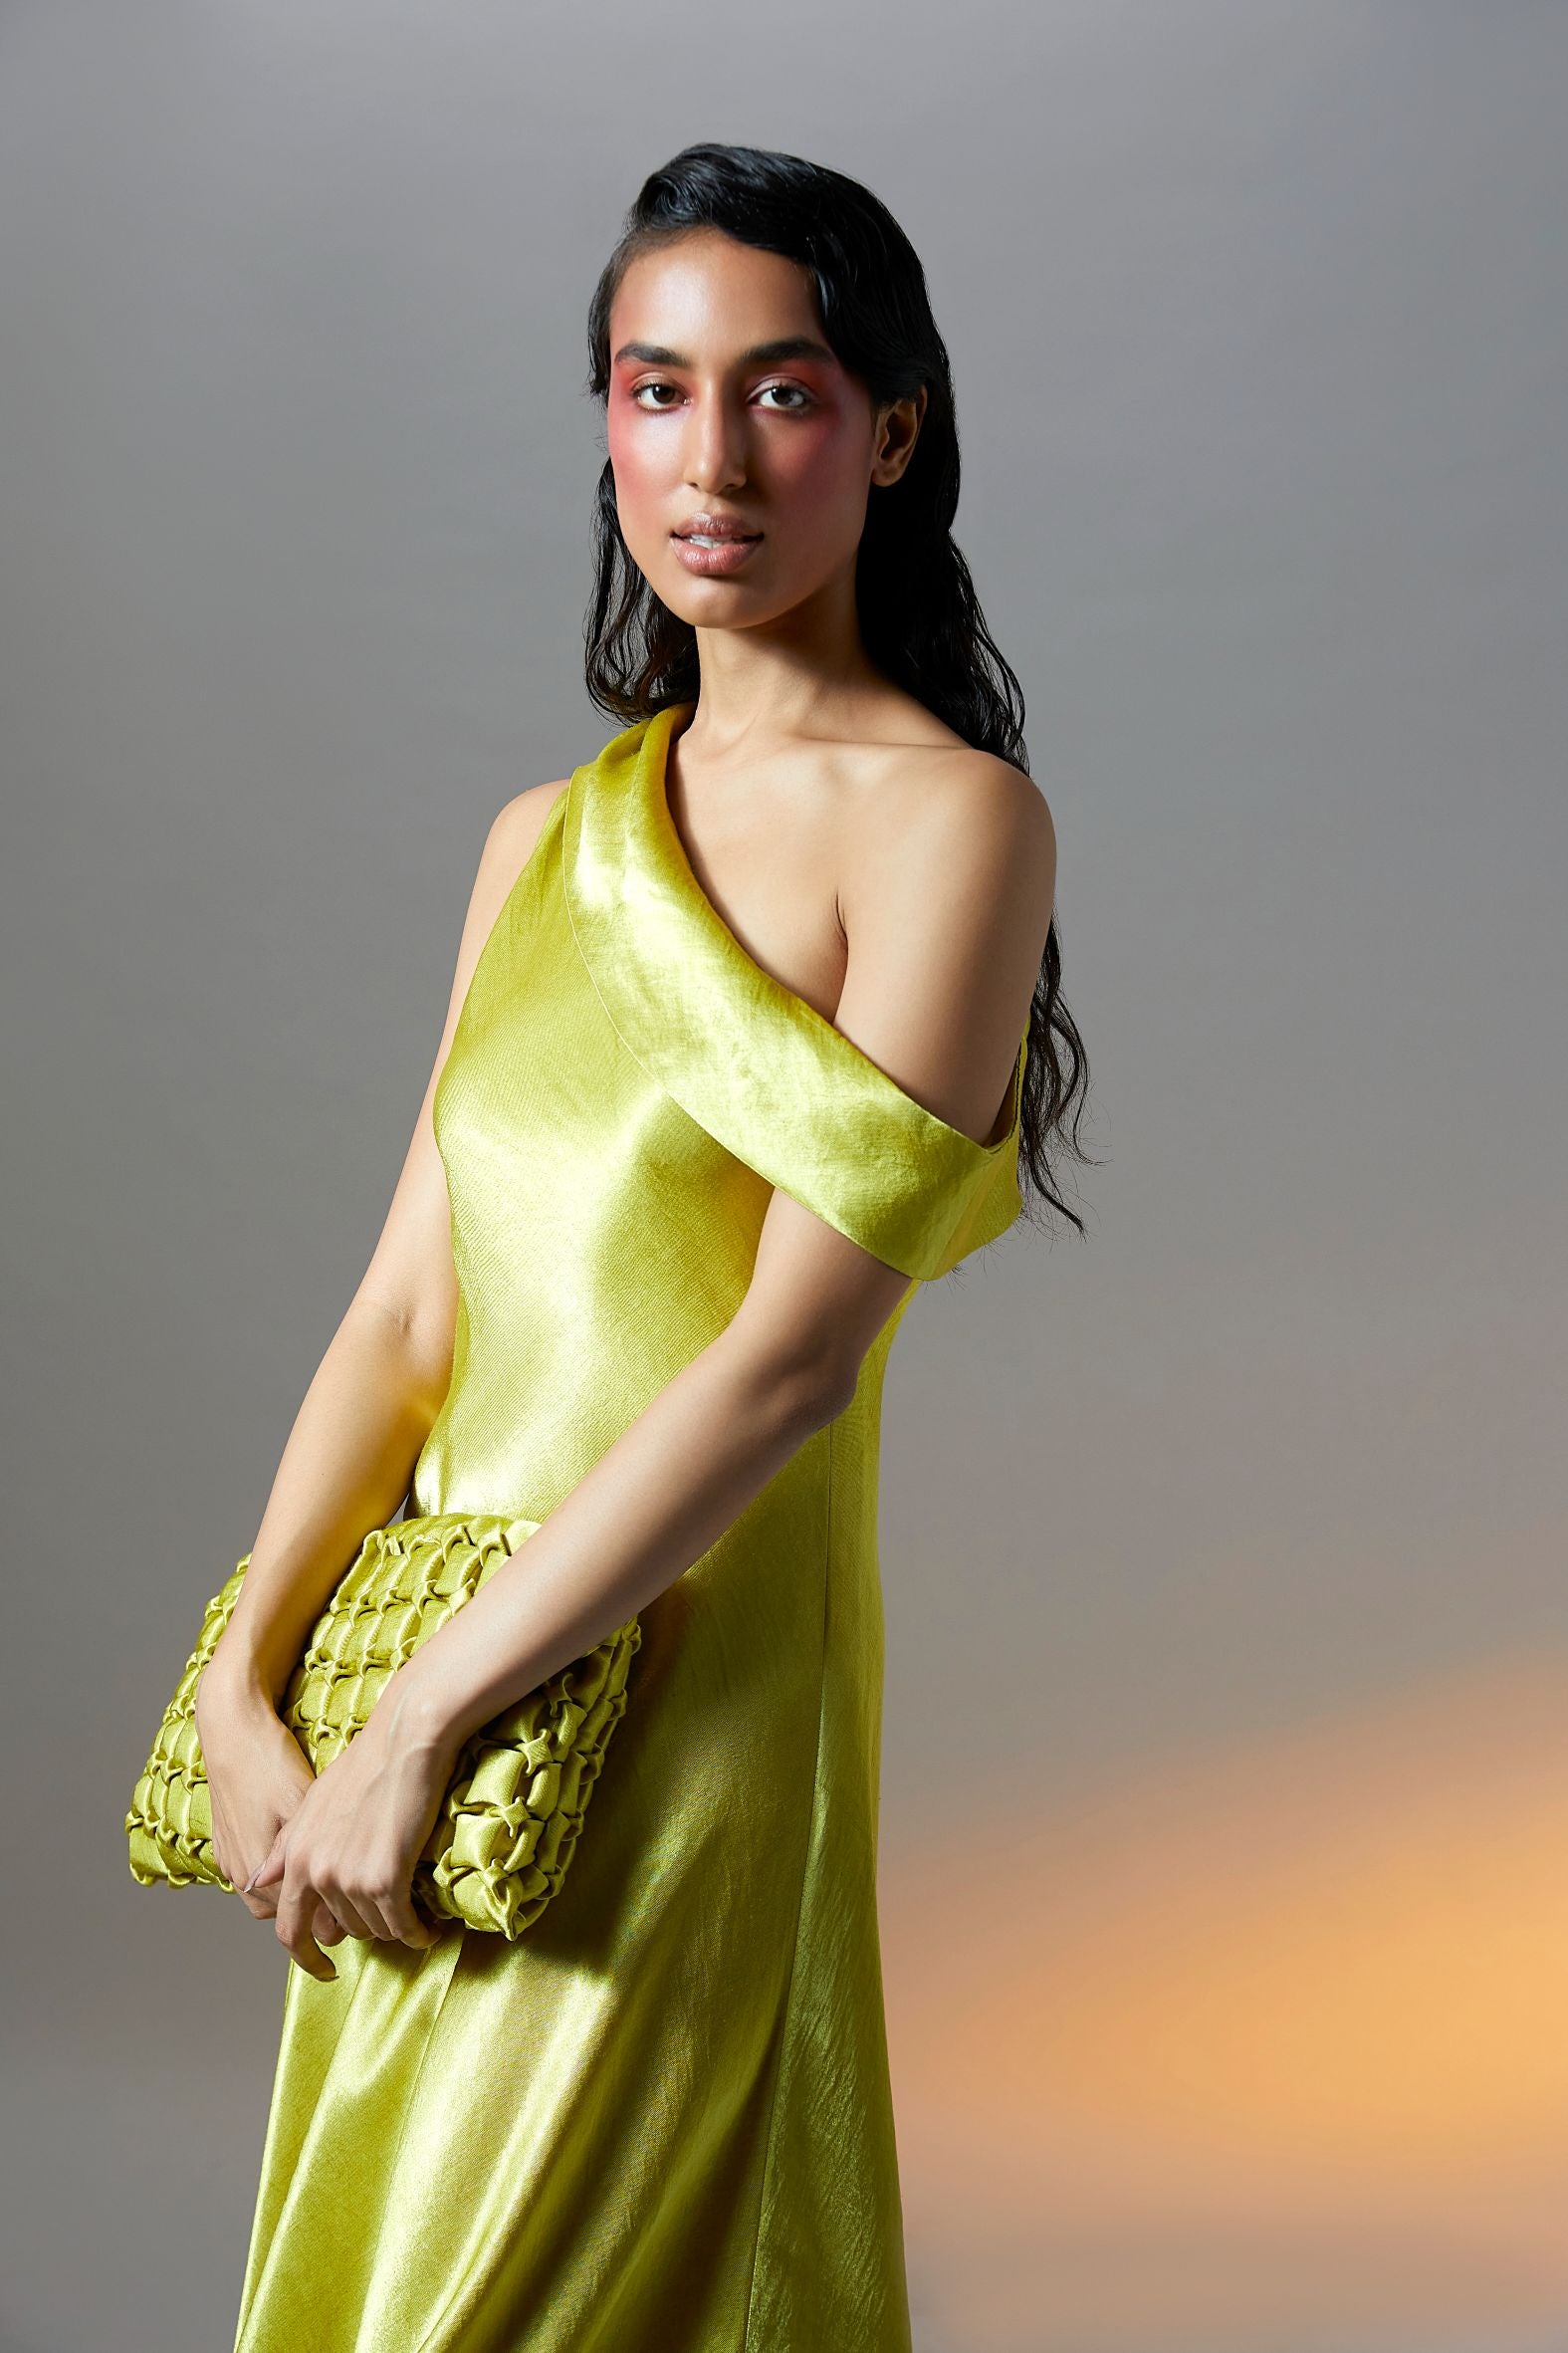 Lemon Luxe Dress – Āroka